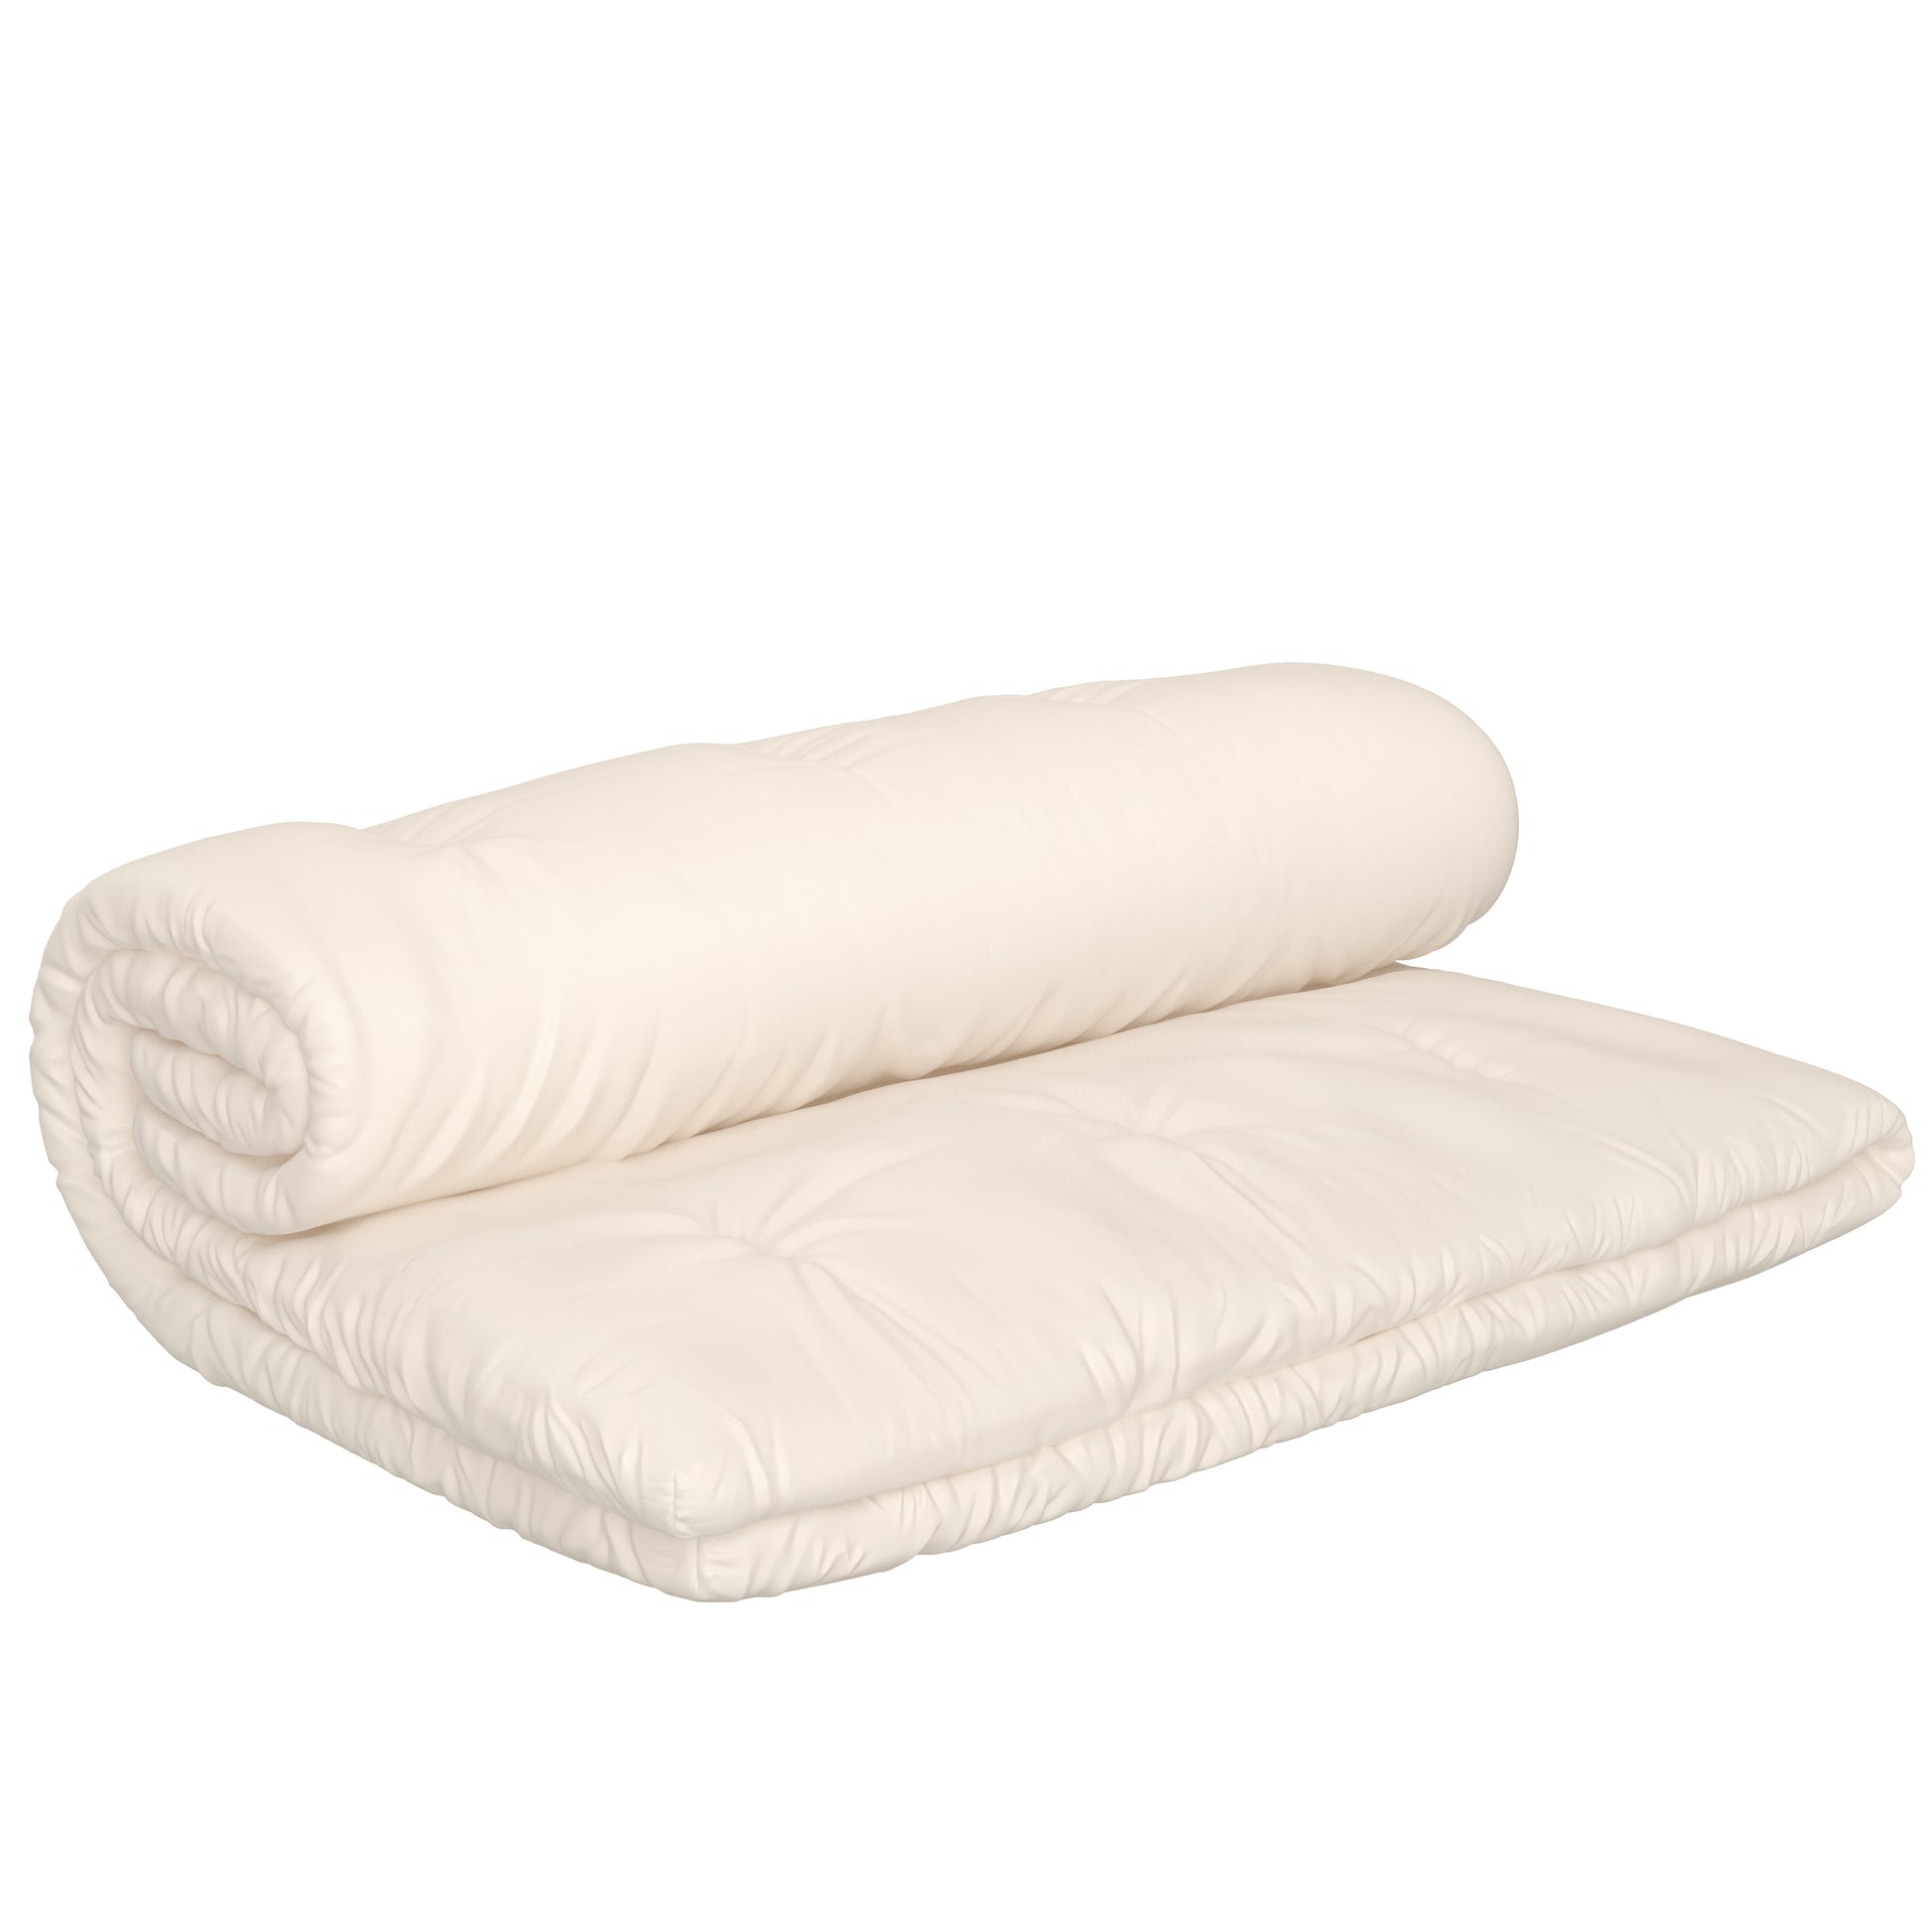 Wooly™ - Certified Organic, 3" Wool Pillow Top - Organic Mattresses, Inc. - Sleep Organic!®